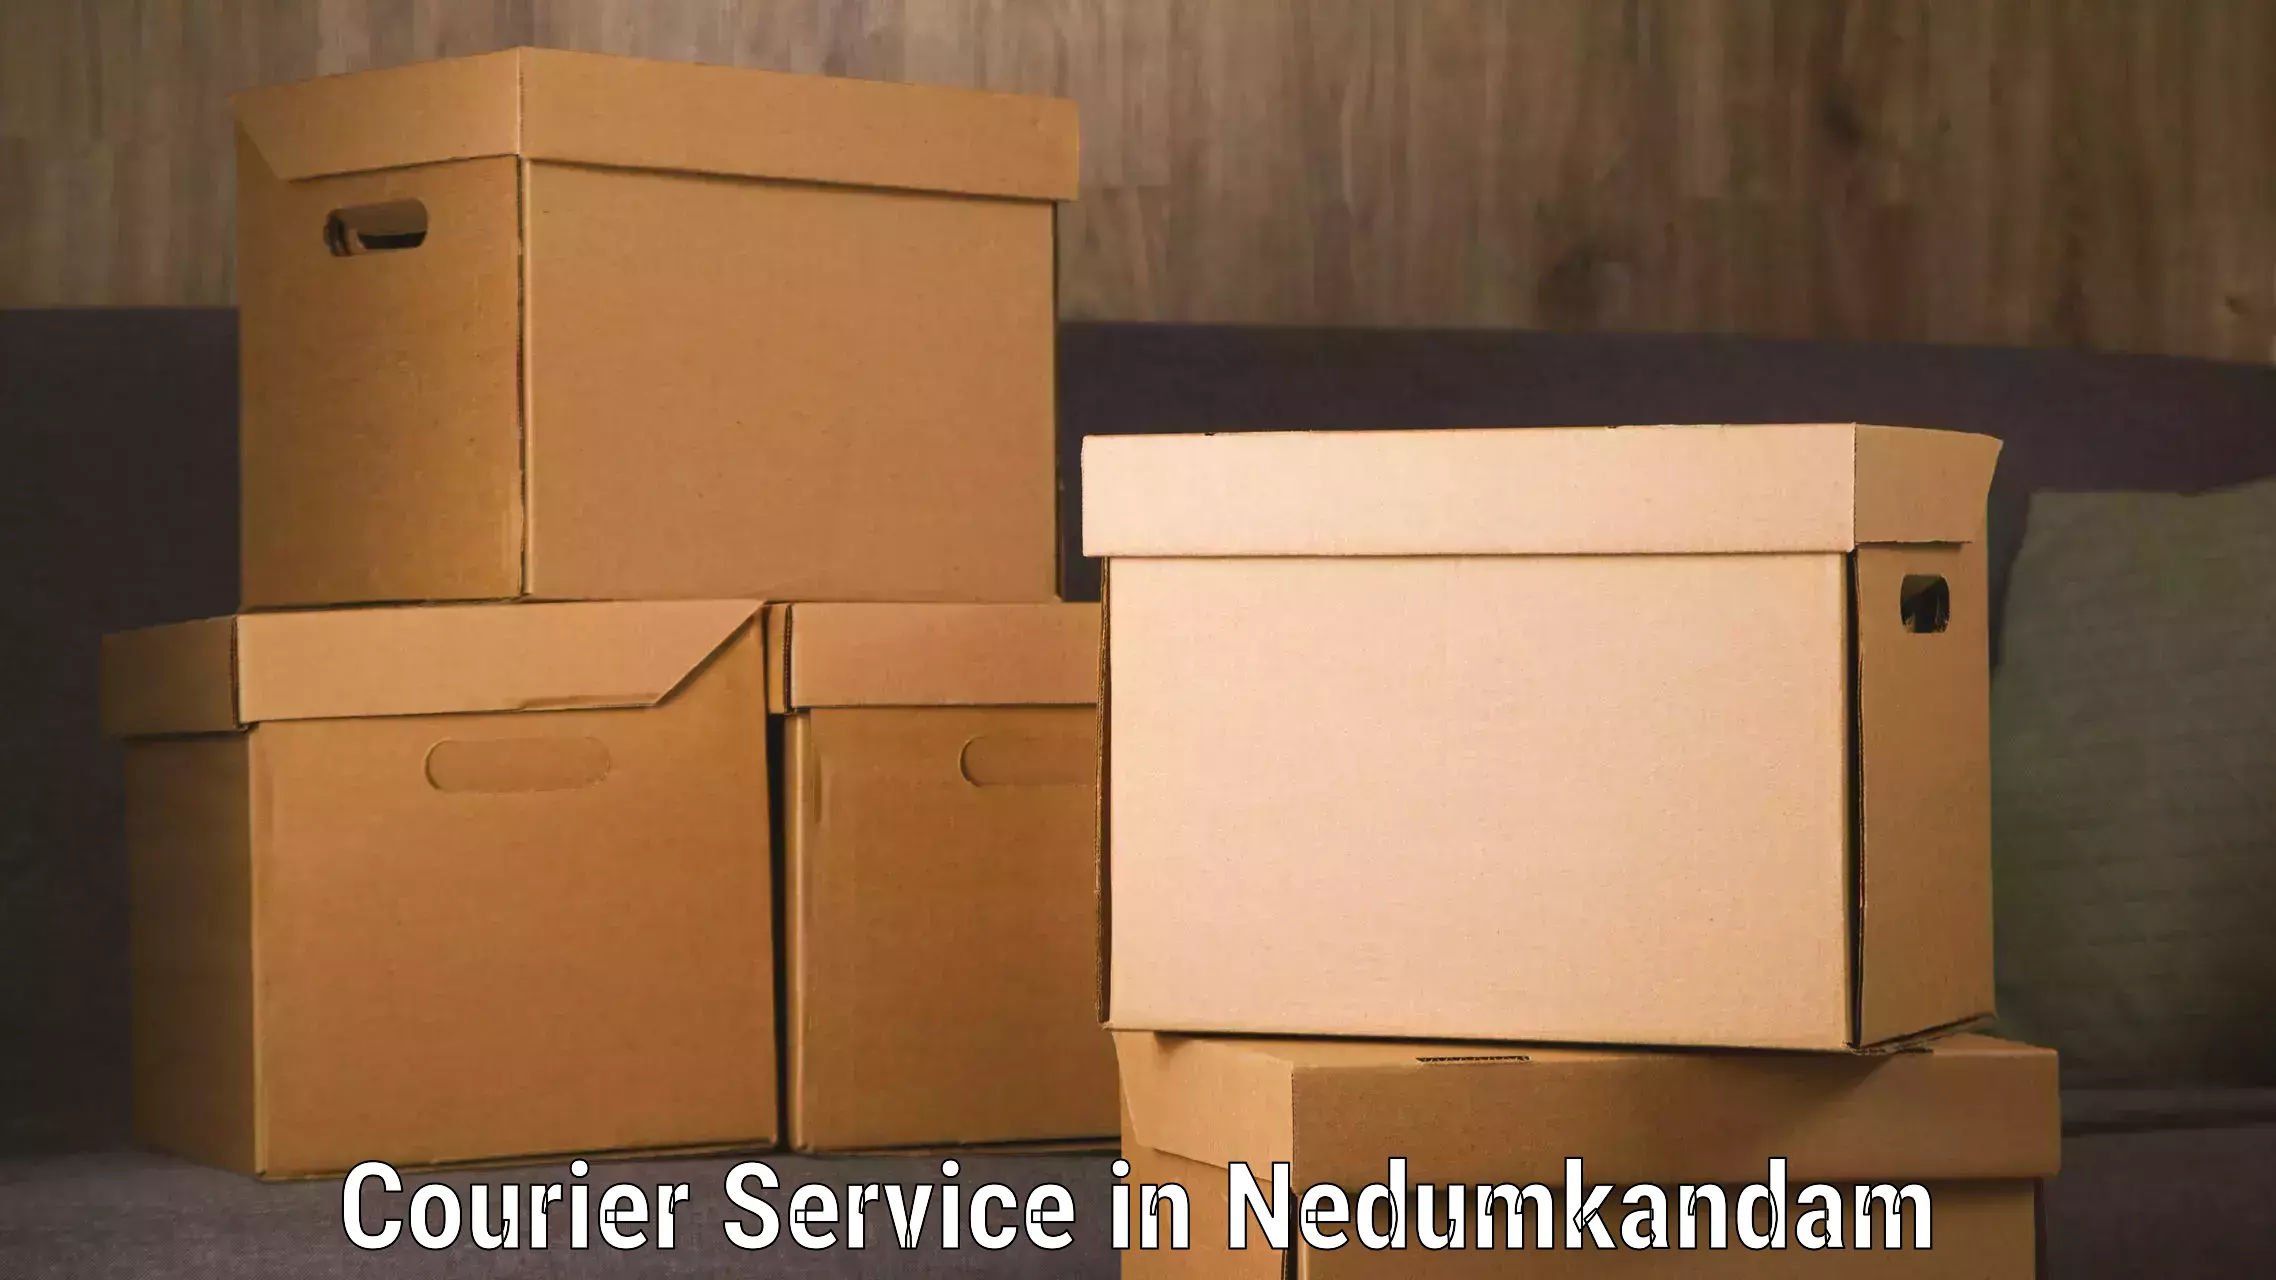 Innovative courier solutions in Nedumkandam